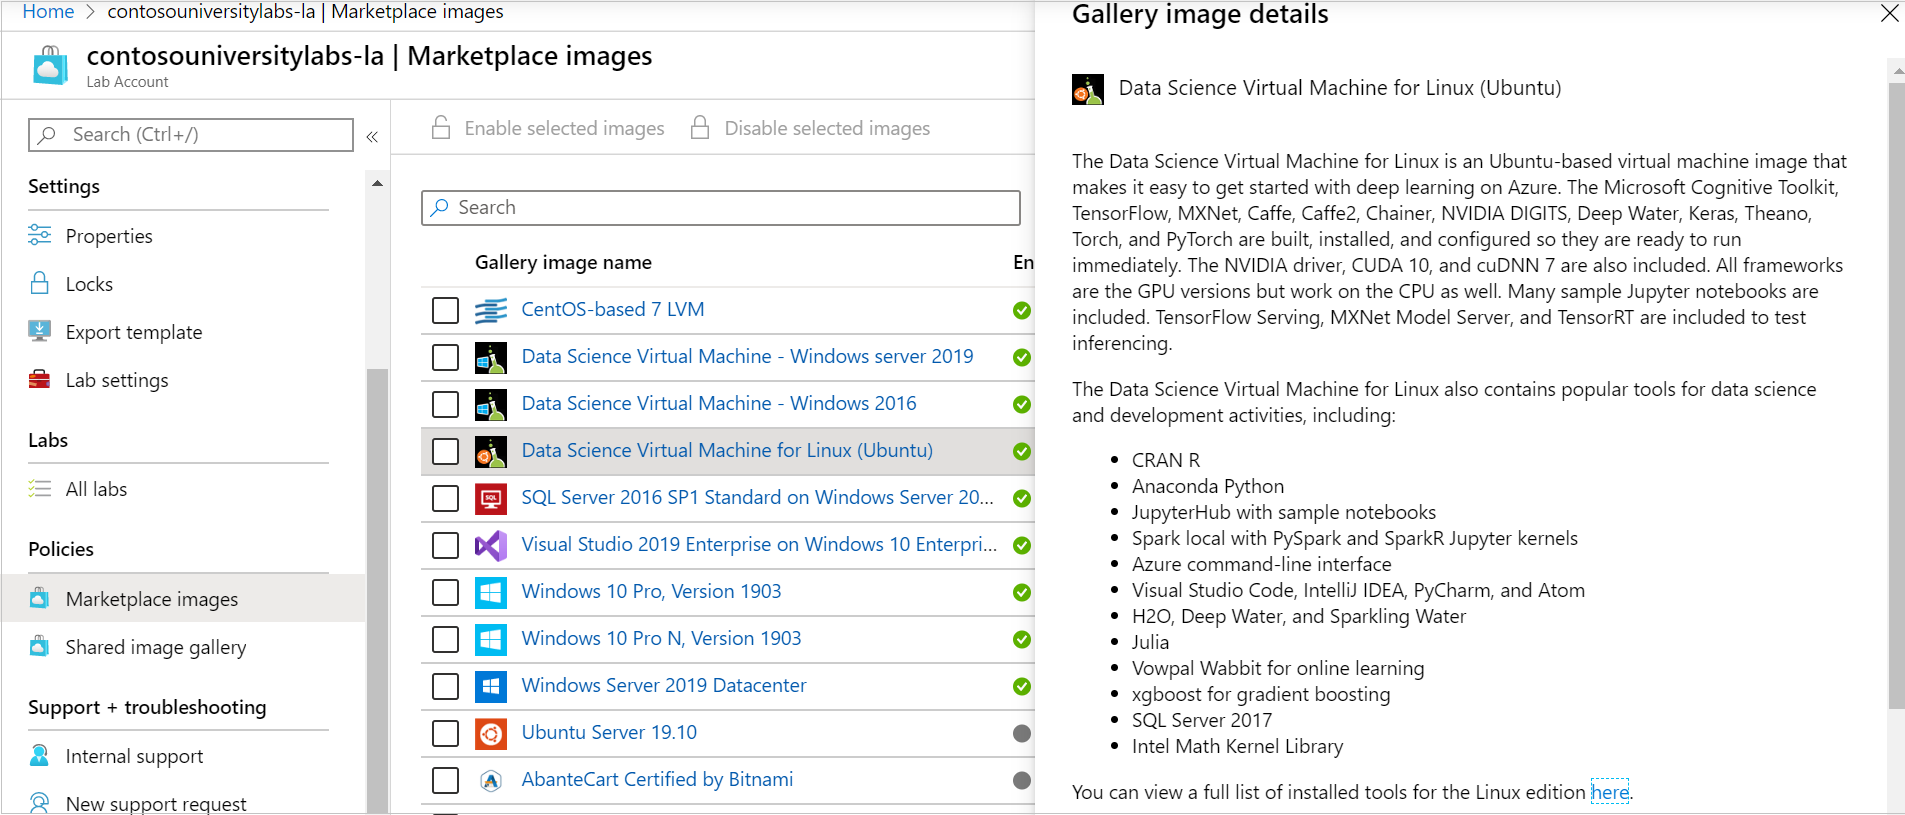 Azure Marketplace 中可供檢閱的映像清單的螢幕擷取畫面。